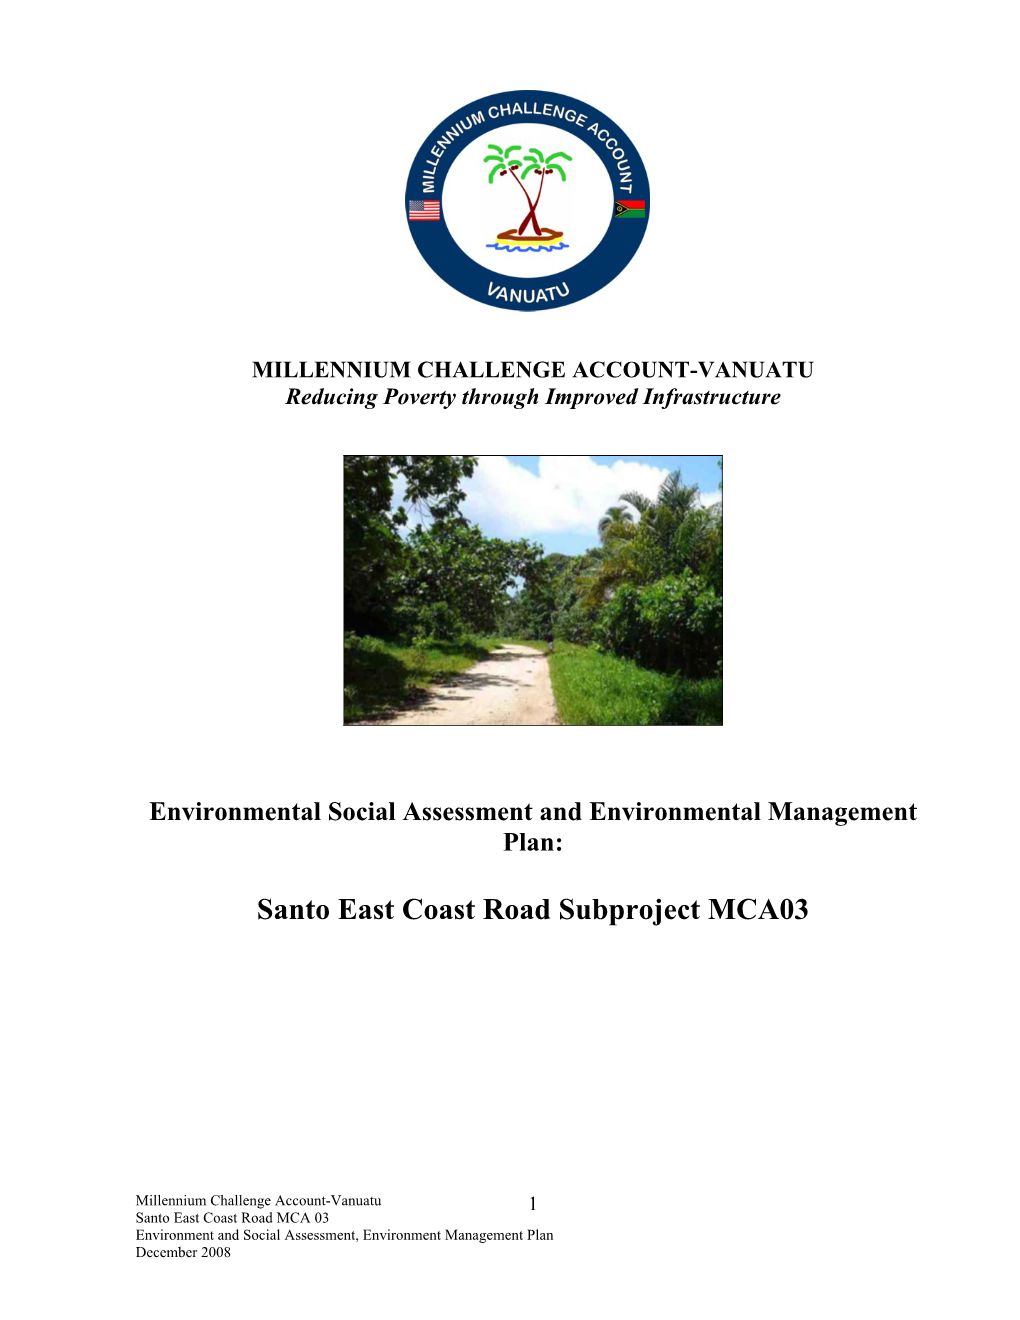 Santo East Coast Road Subproject MCA03